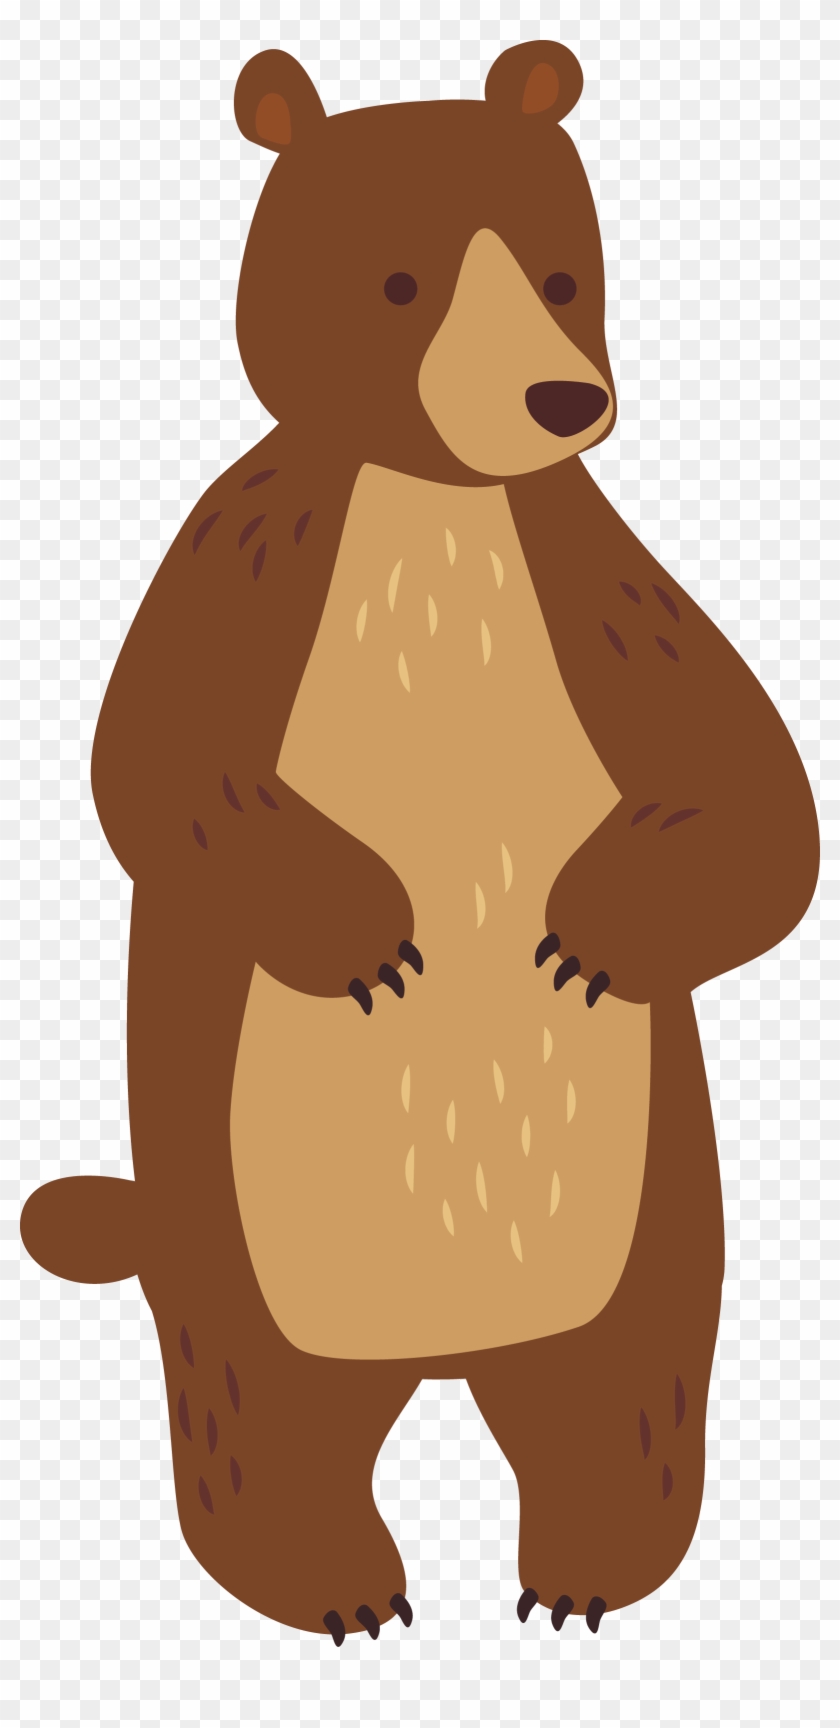 Bear Cartoon Adobe Illustrator - Twisted Envy Your Bear Clever Congrats Funny Mug #1108520